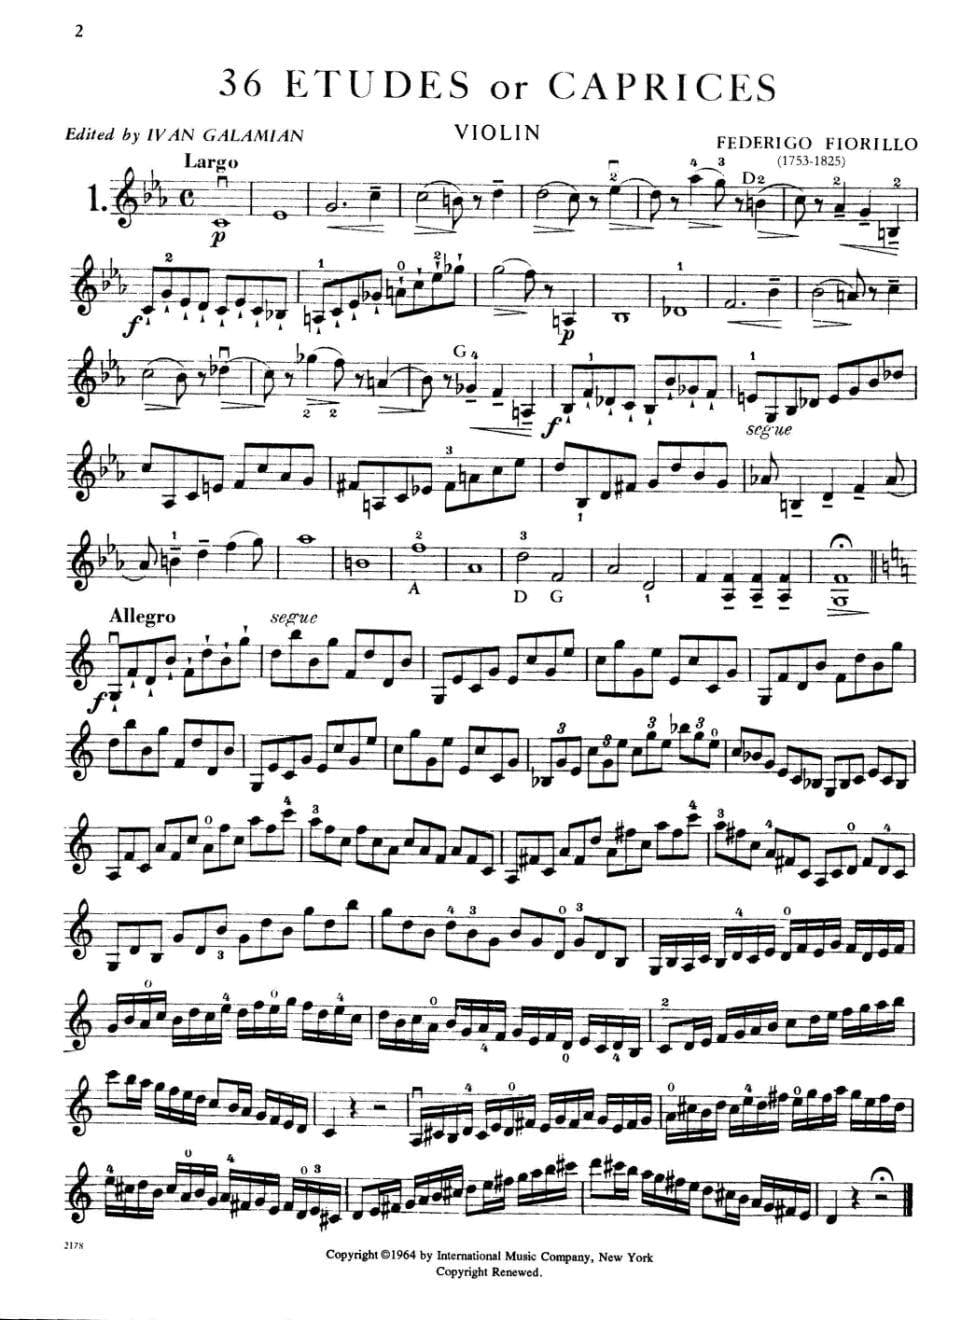 Fiorillo, Federigo - 36 Etudes or Caprices - Violin - edited by Ivan Galamian - International Edition